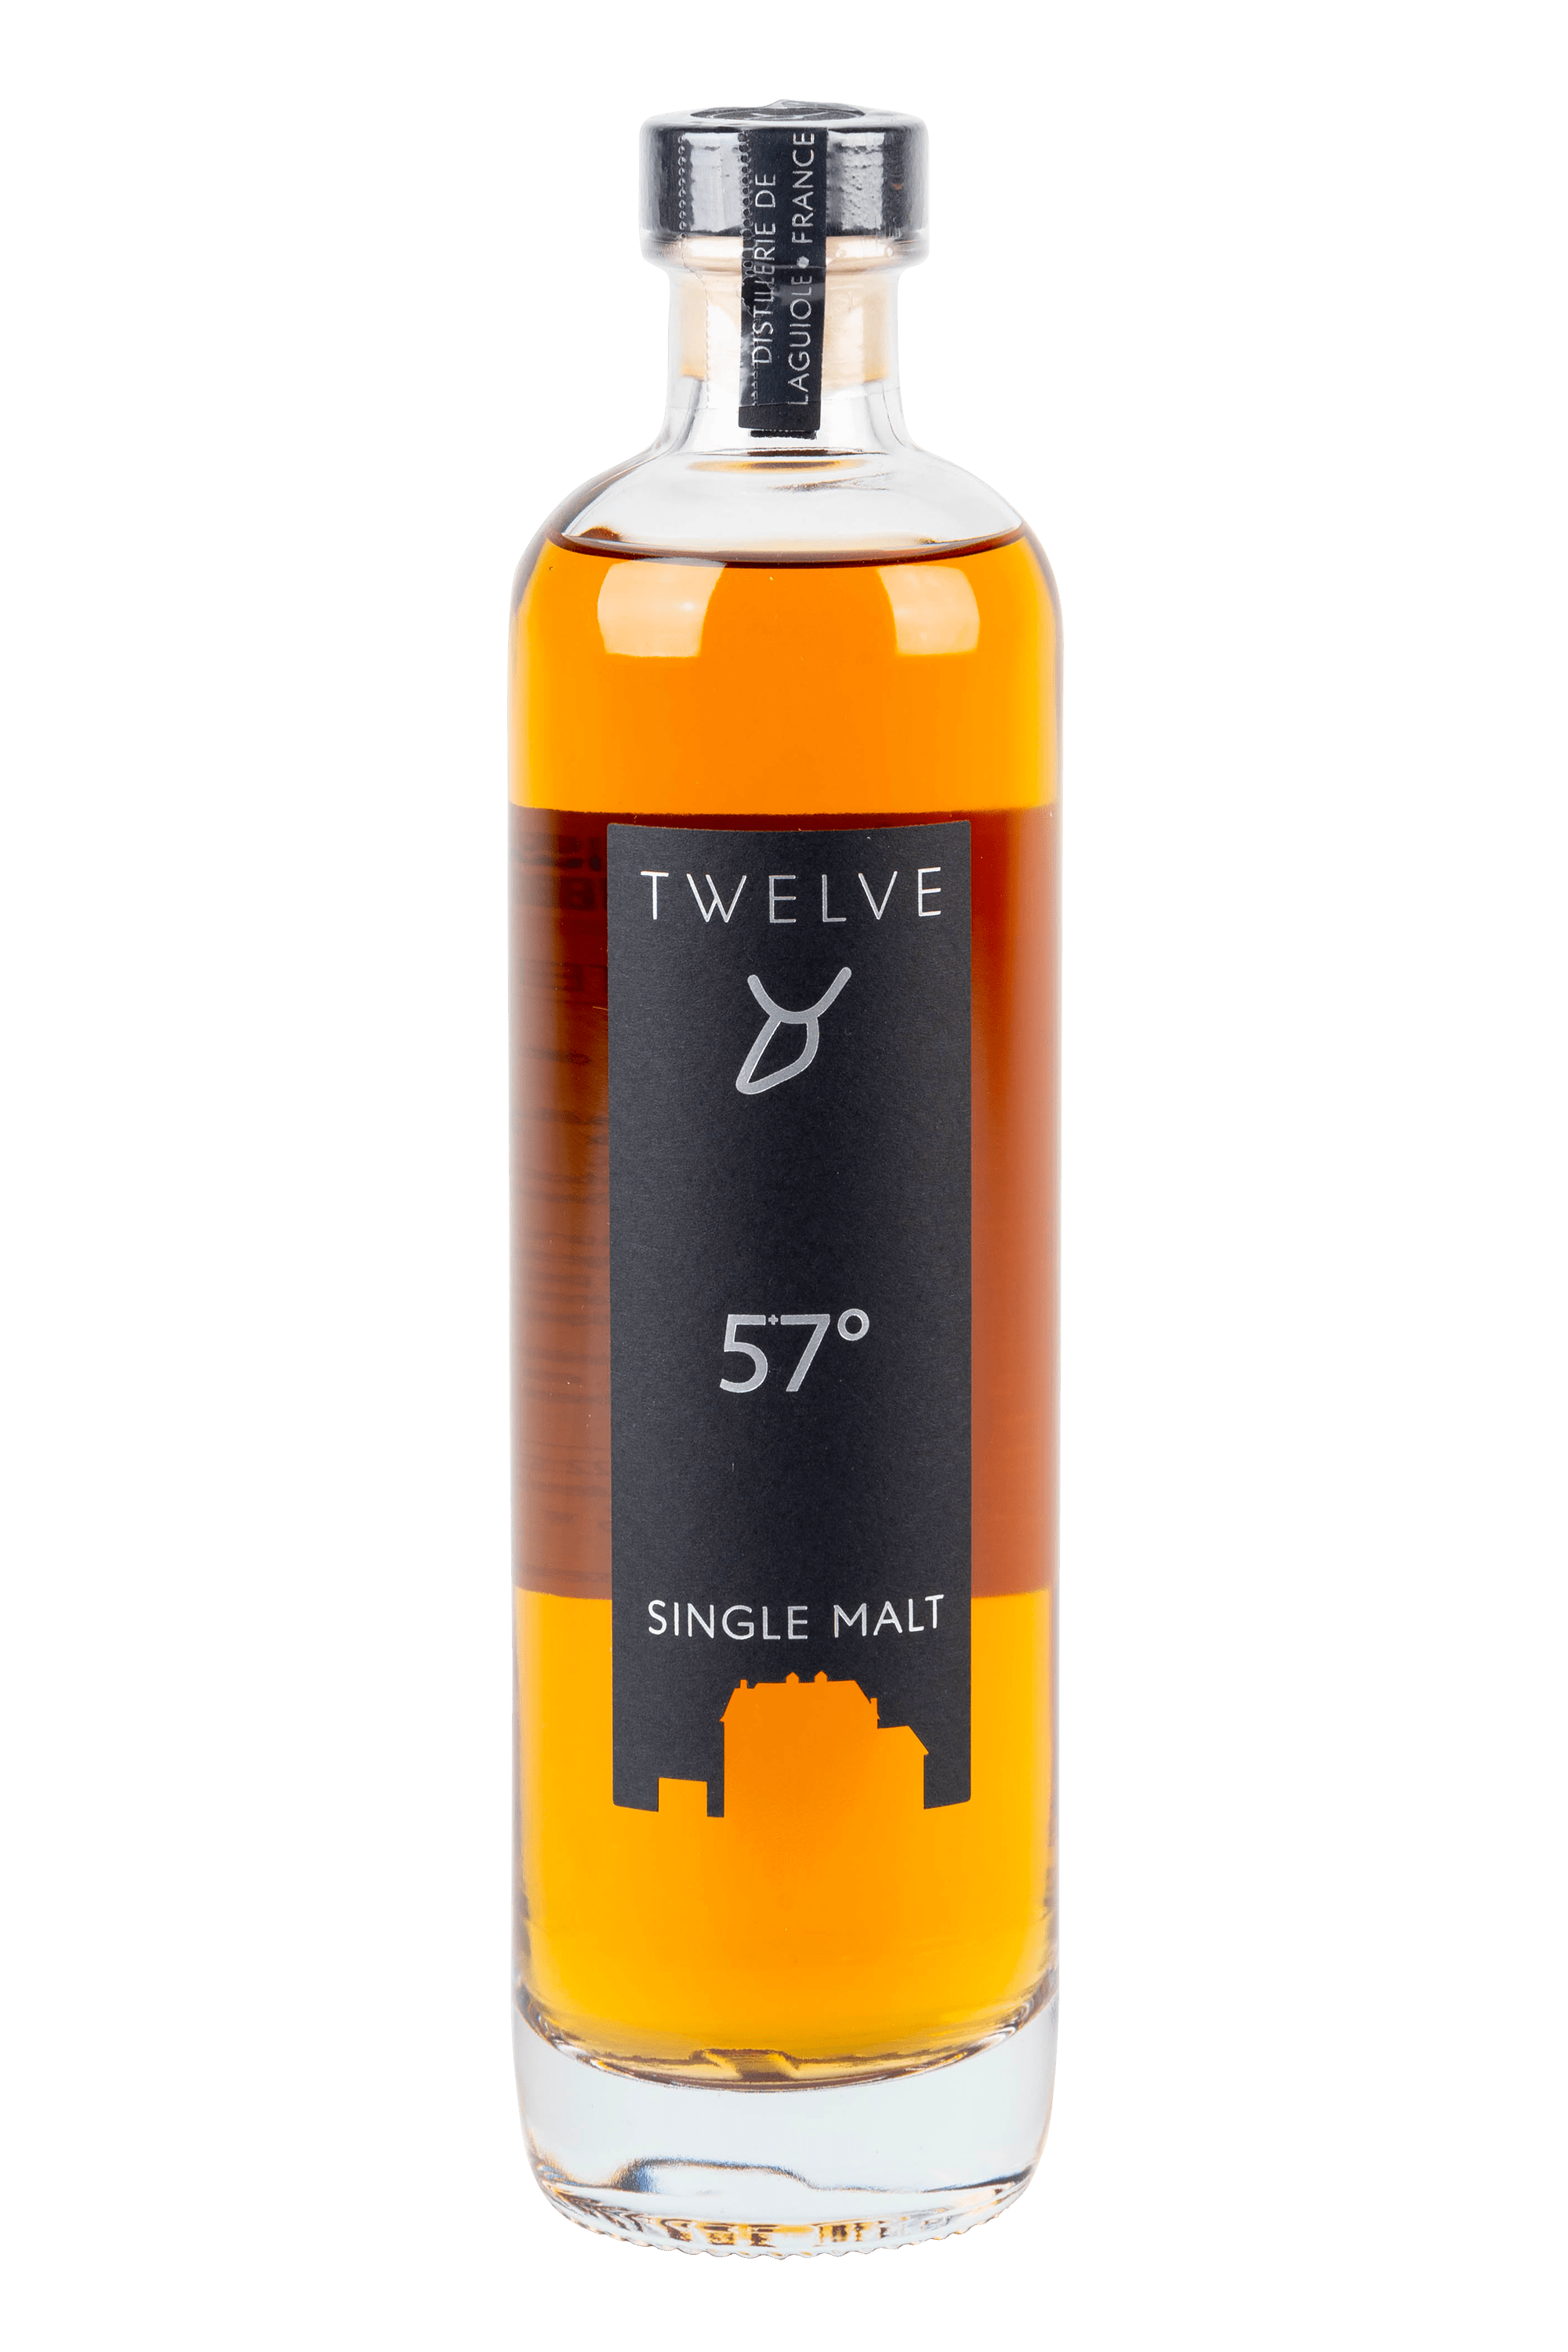 Bouteille de whisky Basalte 57° de la distillerie Twelve.